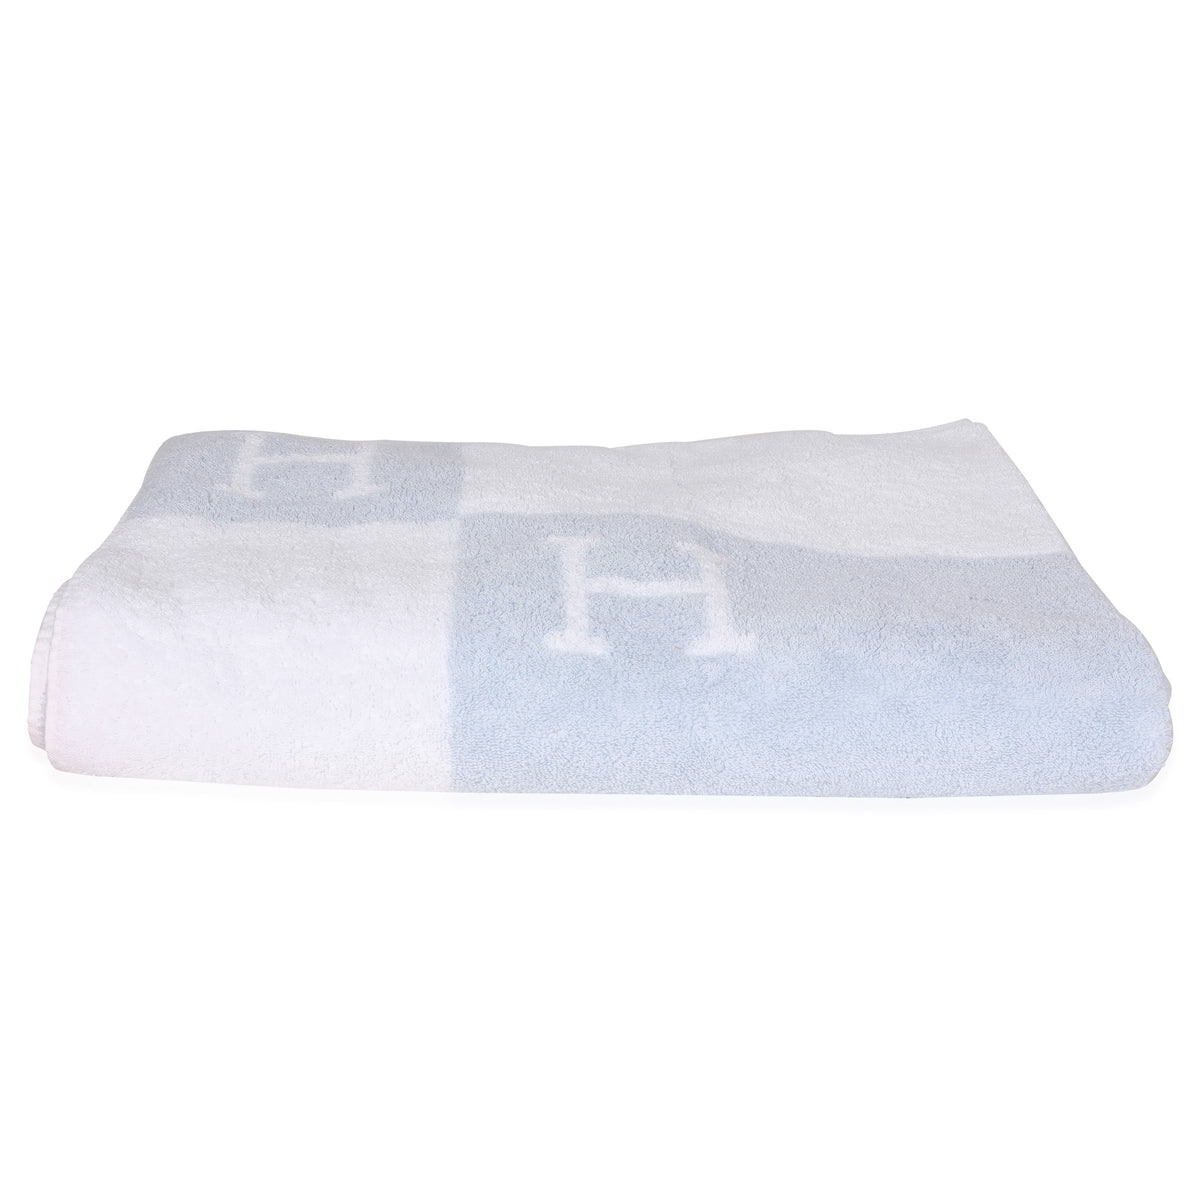 NIB  White & Blue Jacquard Terry Cloth Avalon Bath Towel